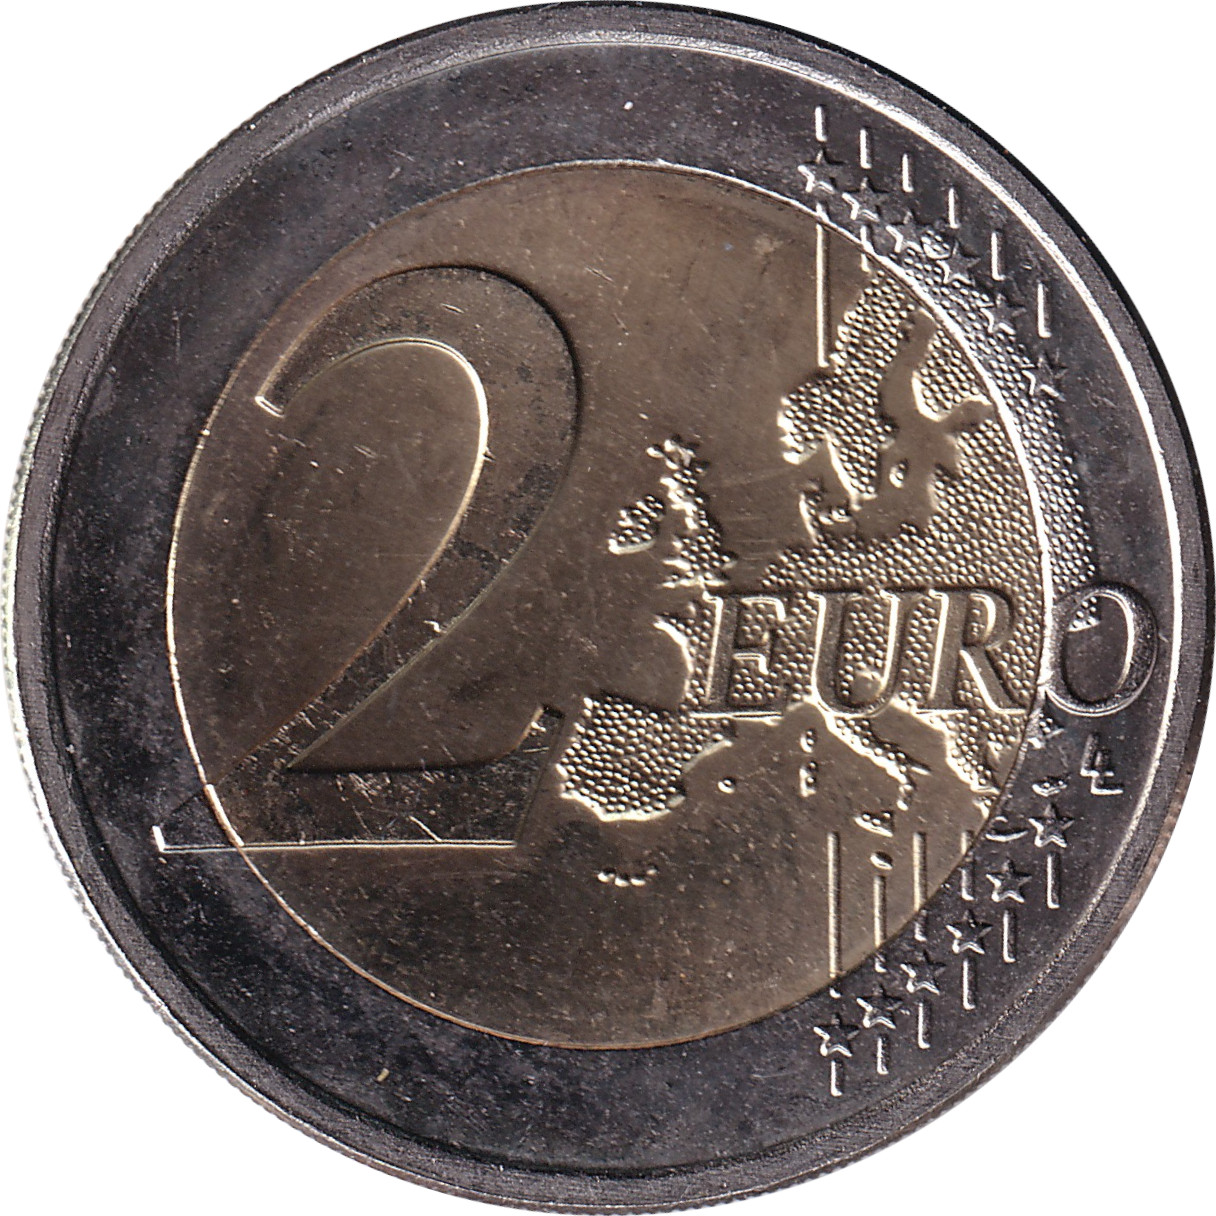 2 euro - Ons Heemecht